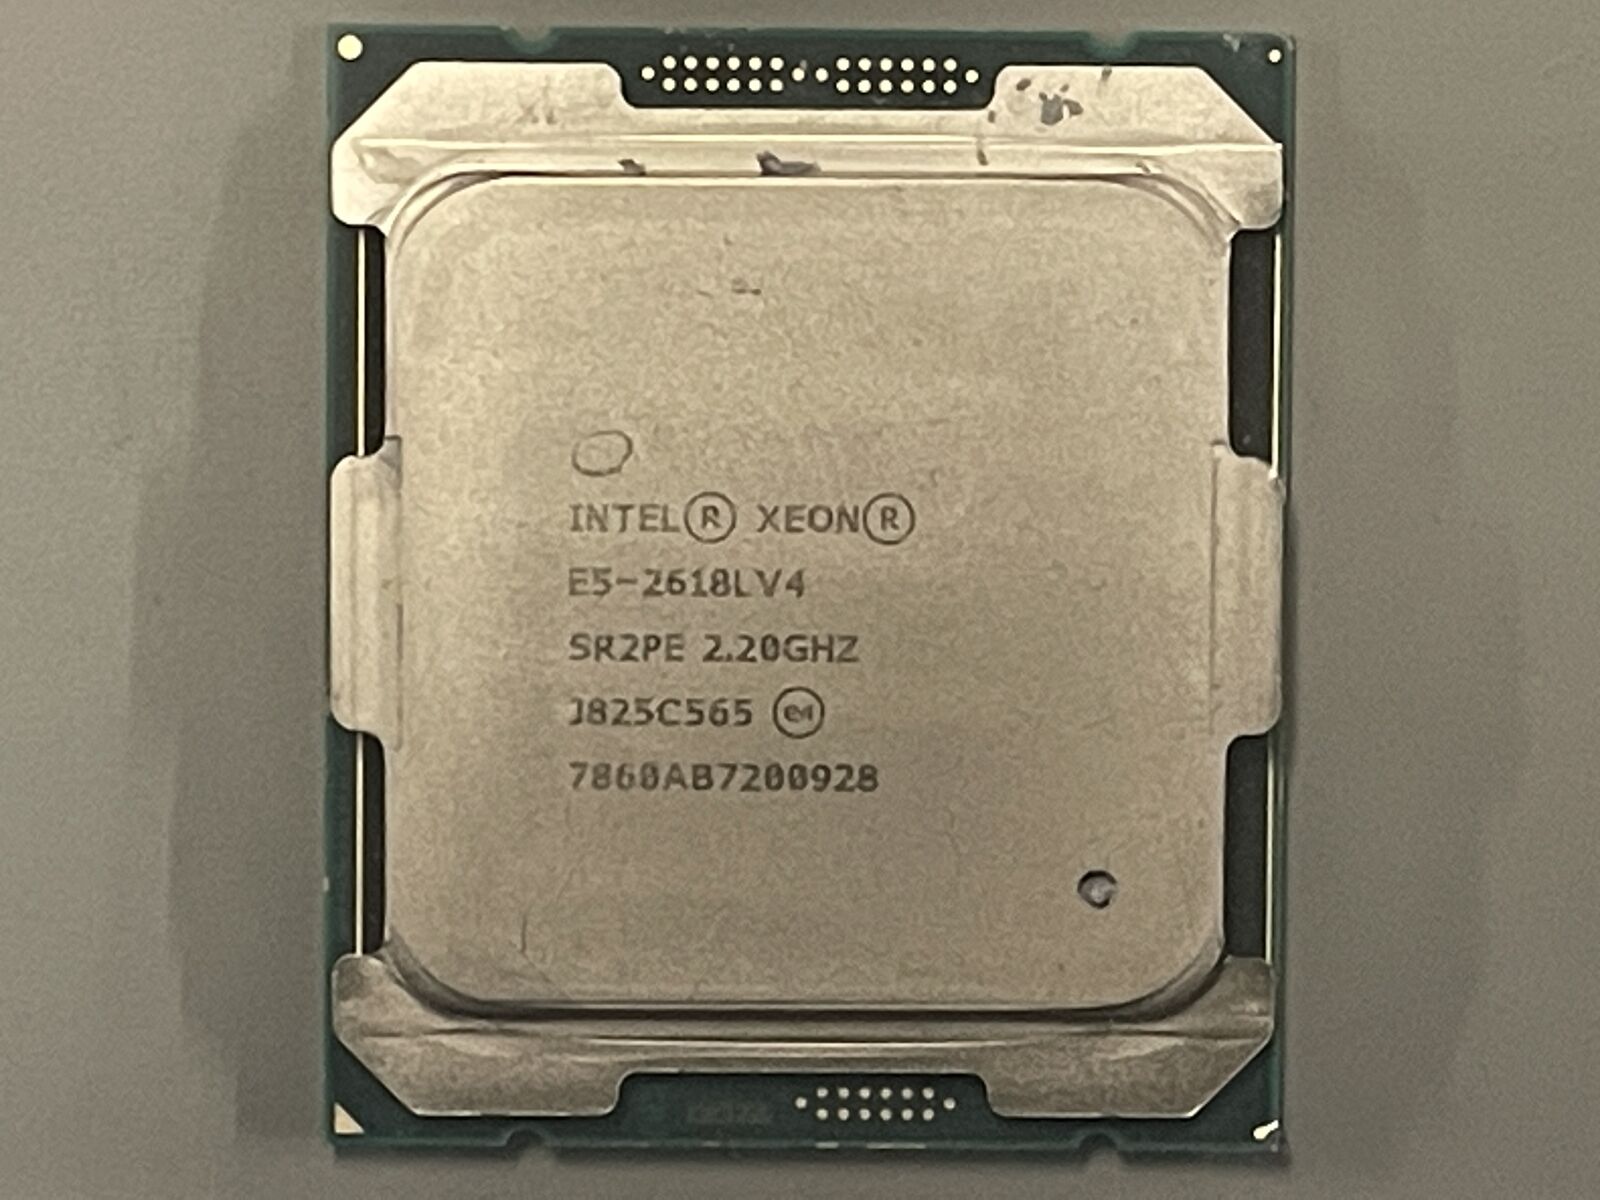 Lot of 20 Intel Xeon E5-2618L V4 SR2PE 2.2Ghz BULK OFFERS ACCEPTED